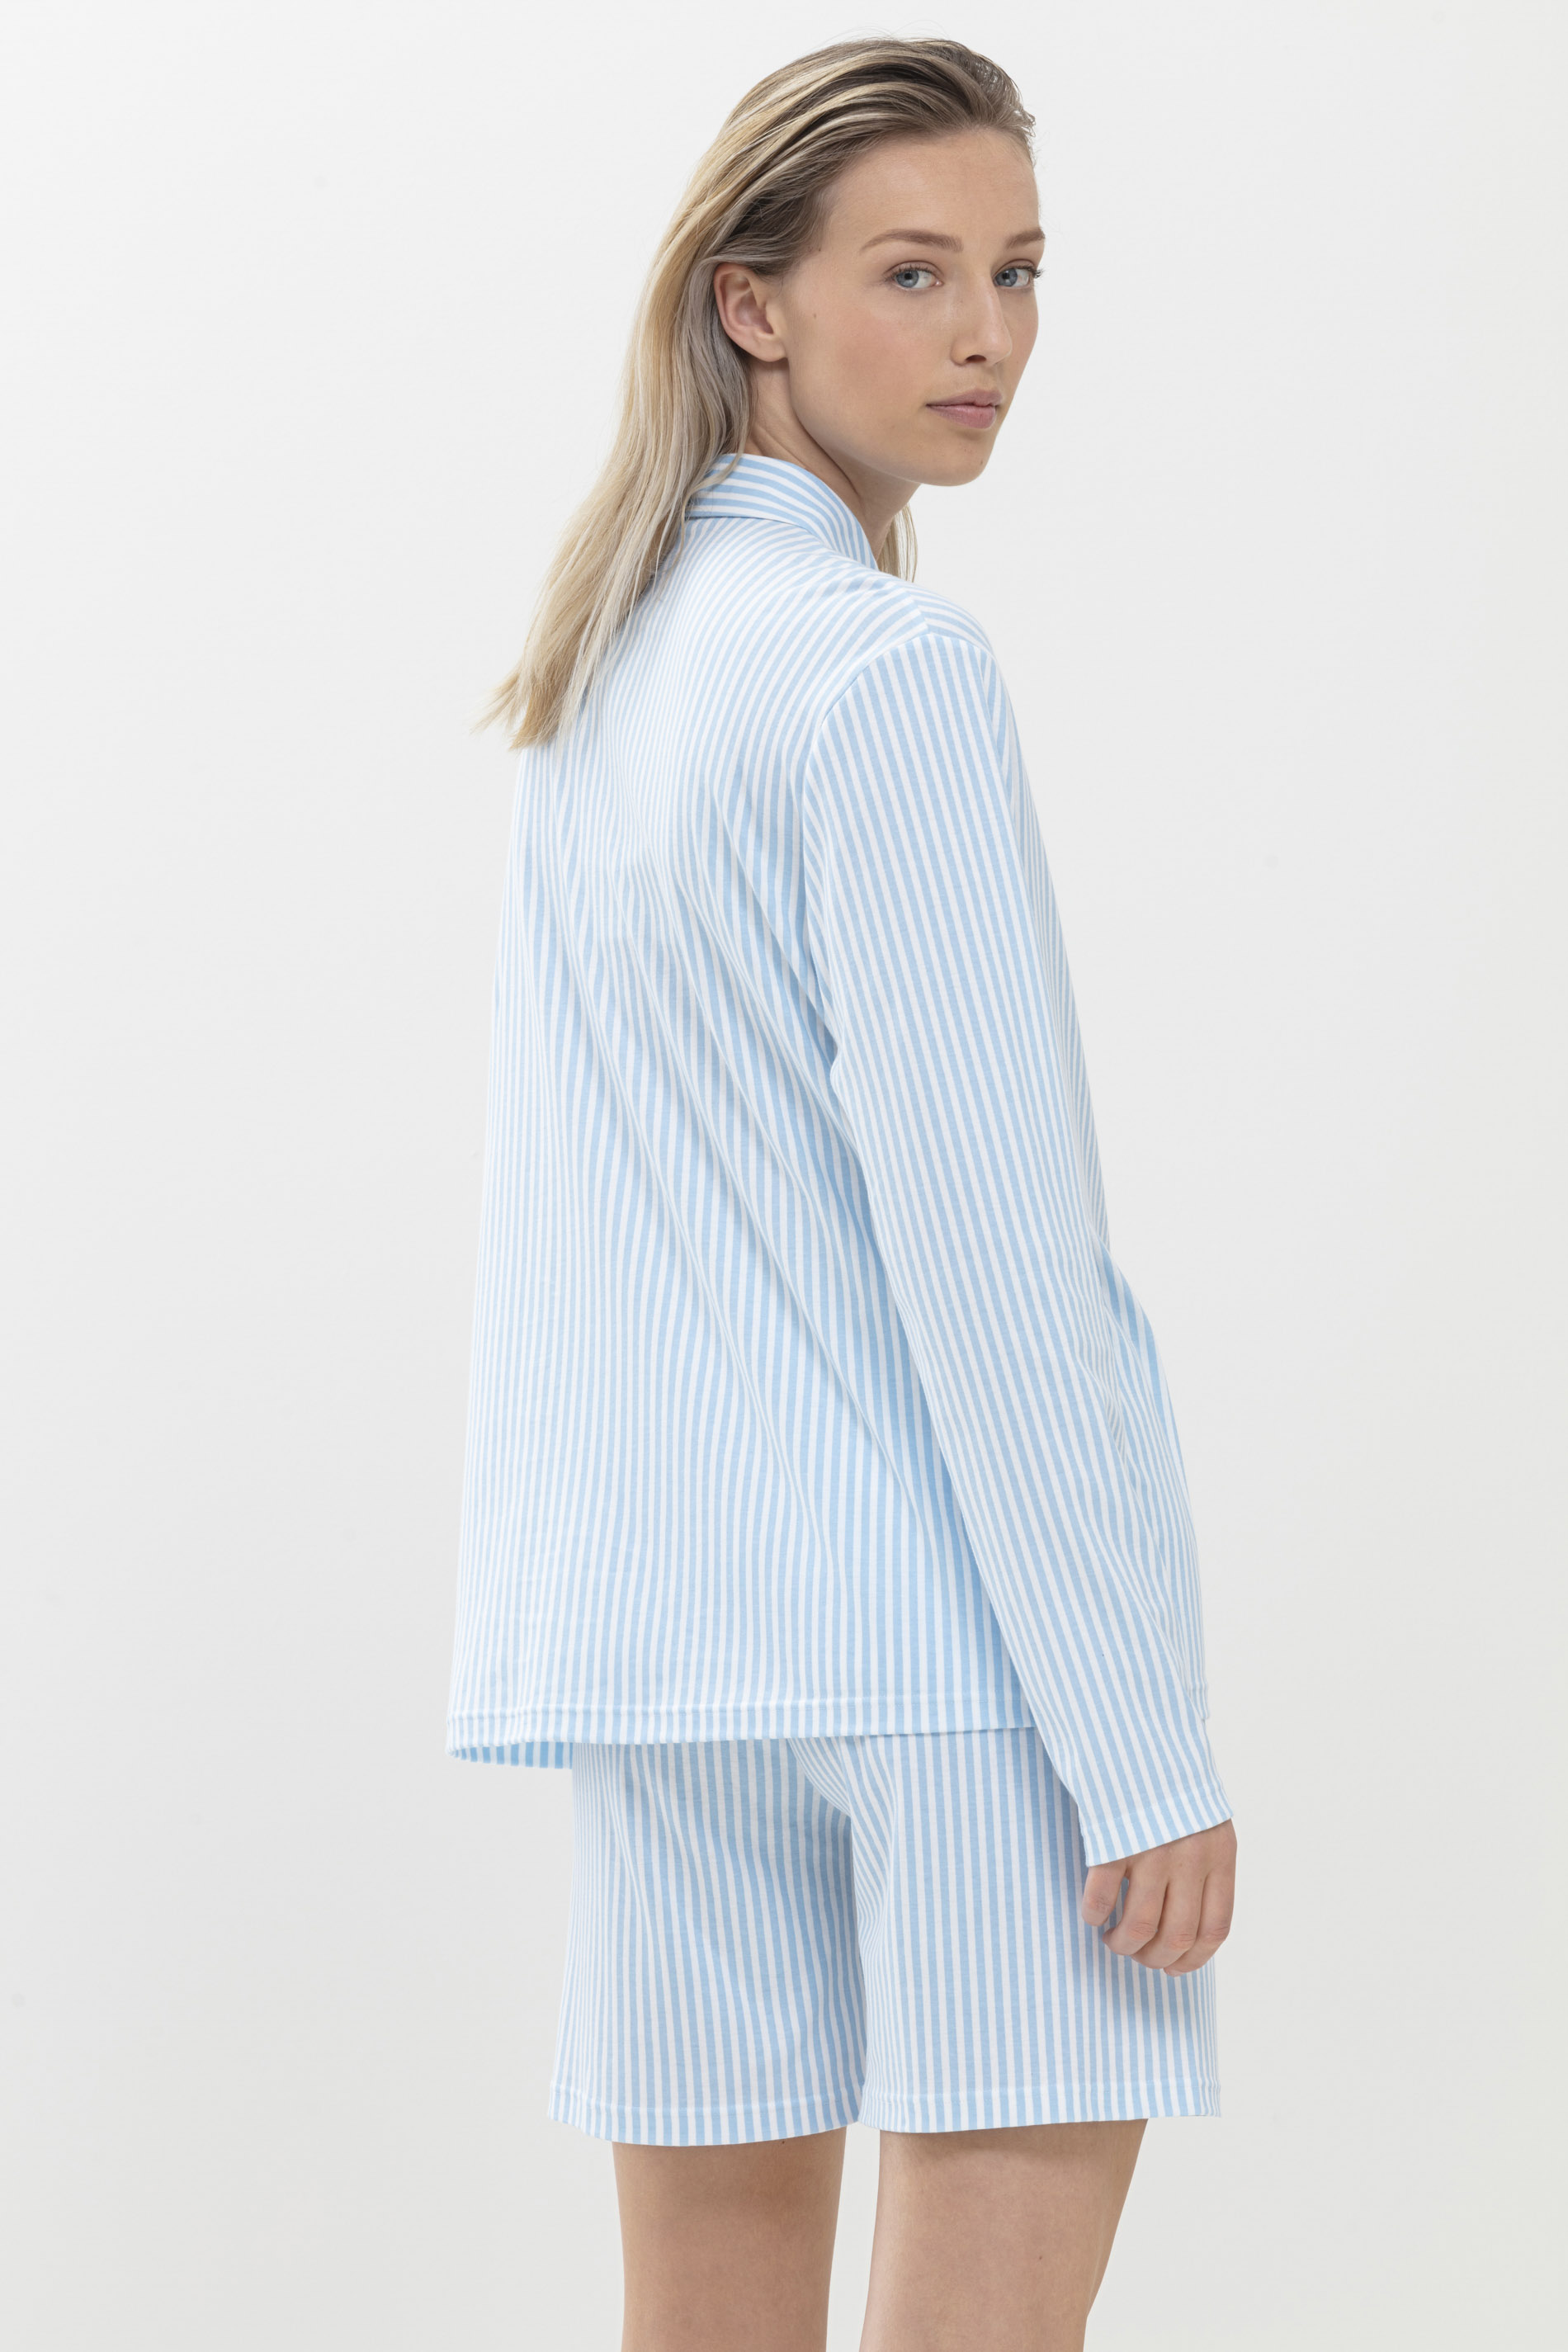 Pyjama shirt Dream Blue Serie Sleepsation Rear View | mey®